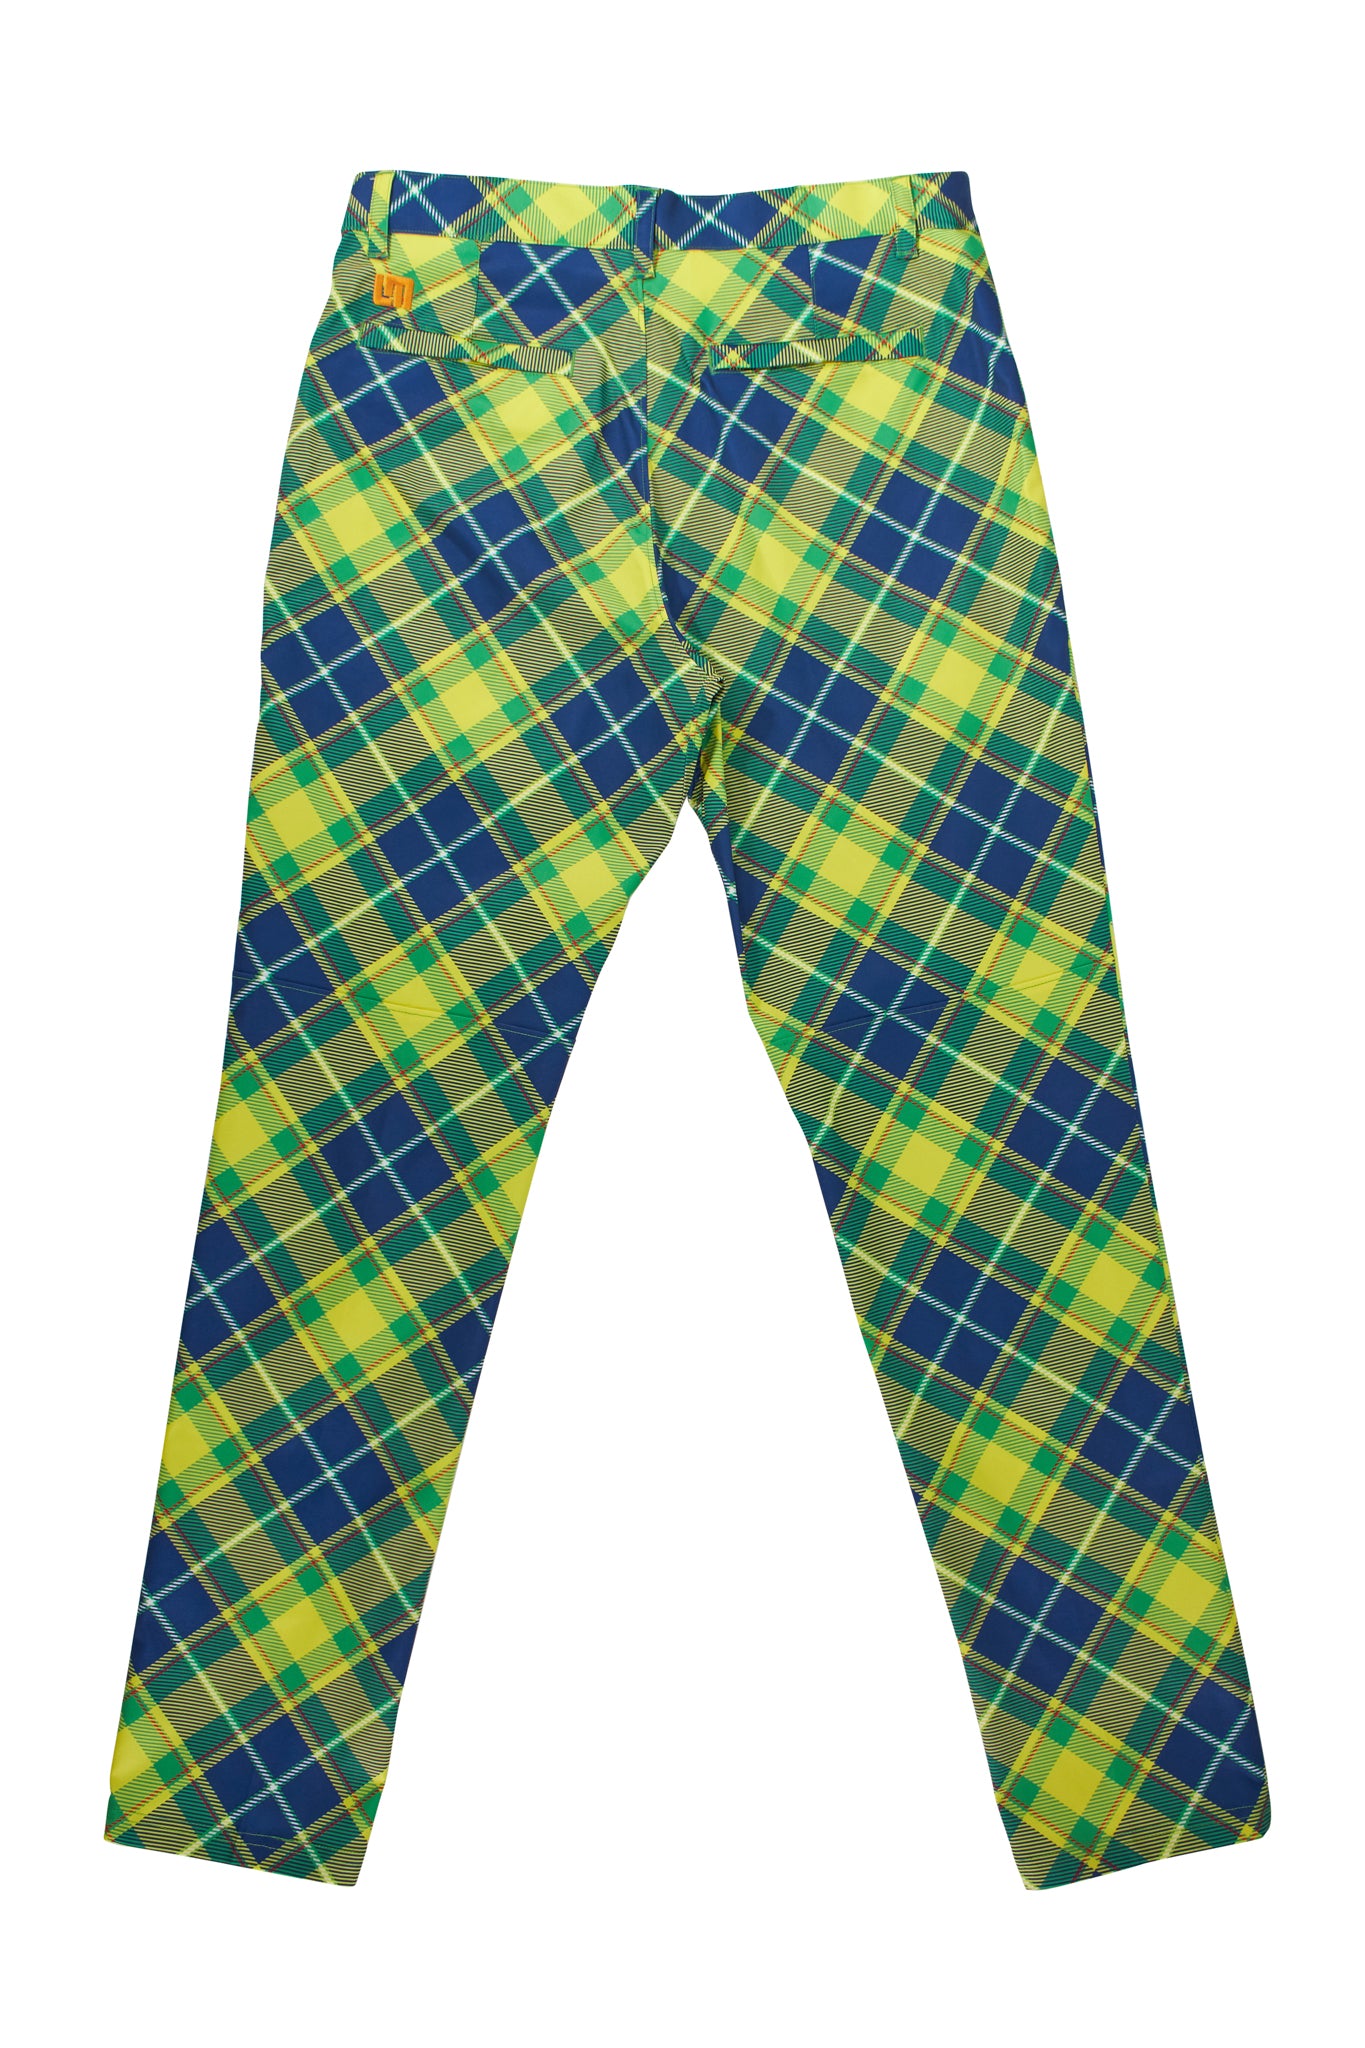 Royal awesome golf pants - Gem